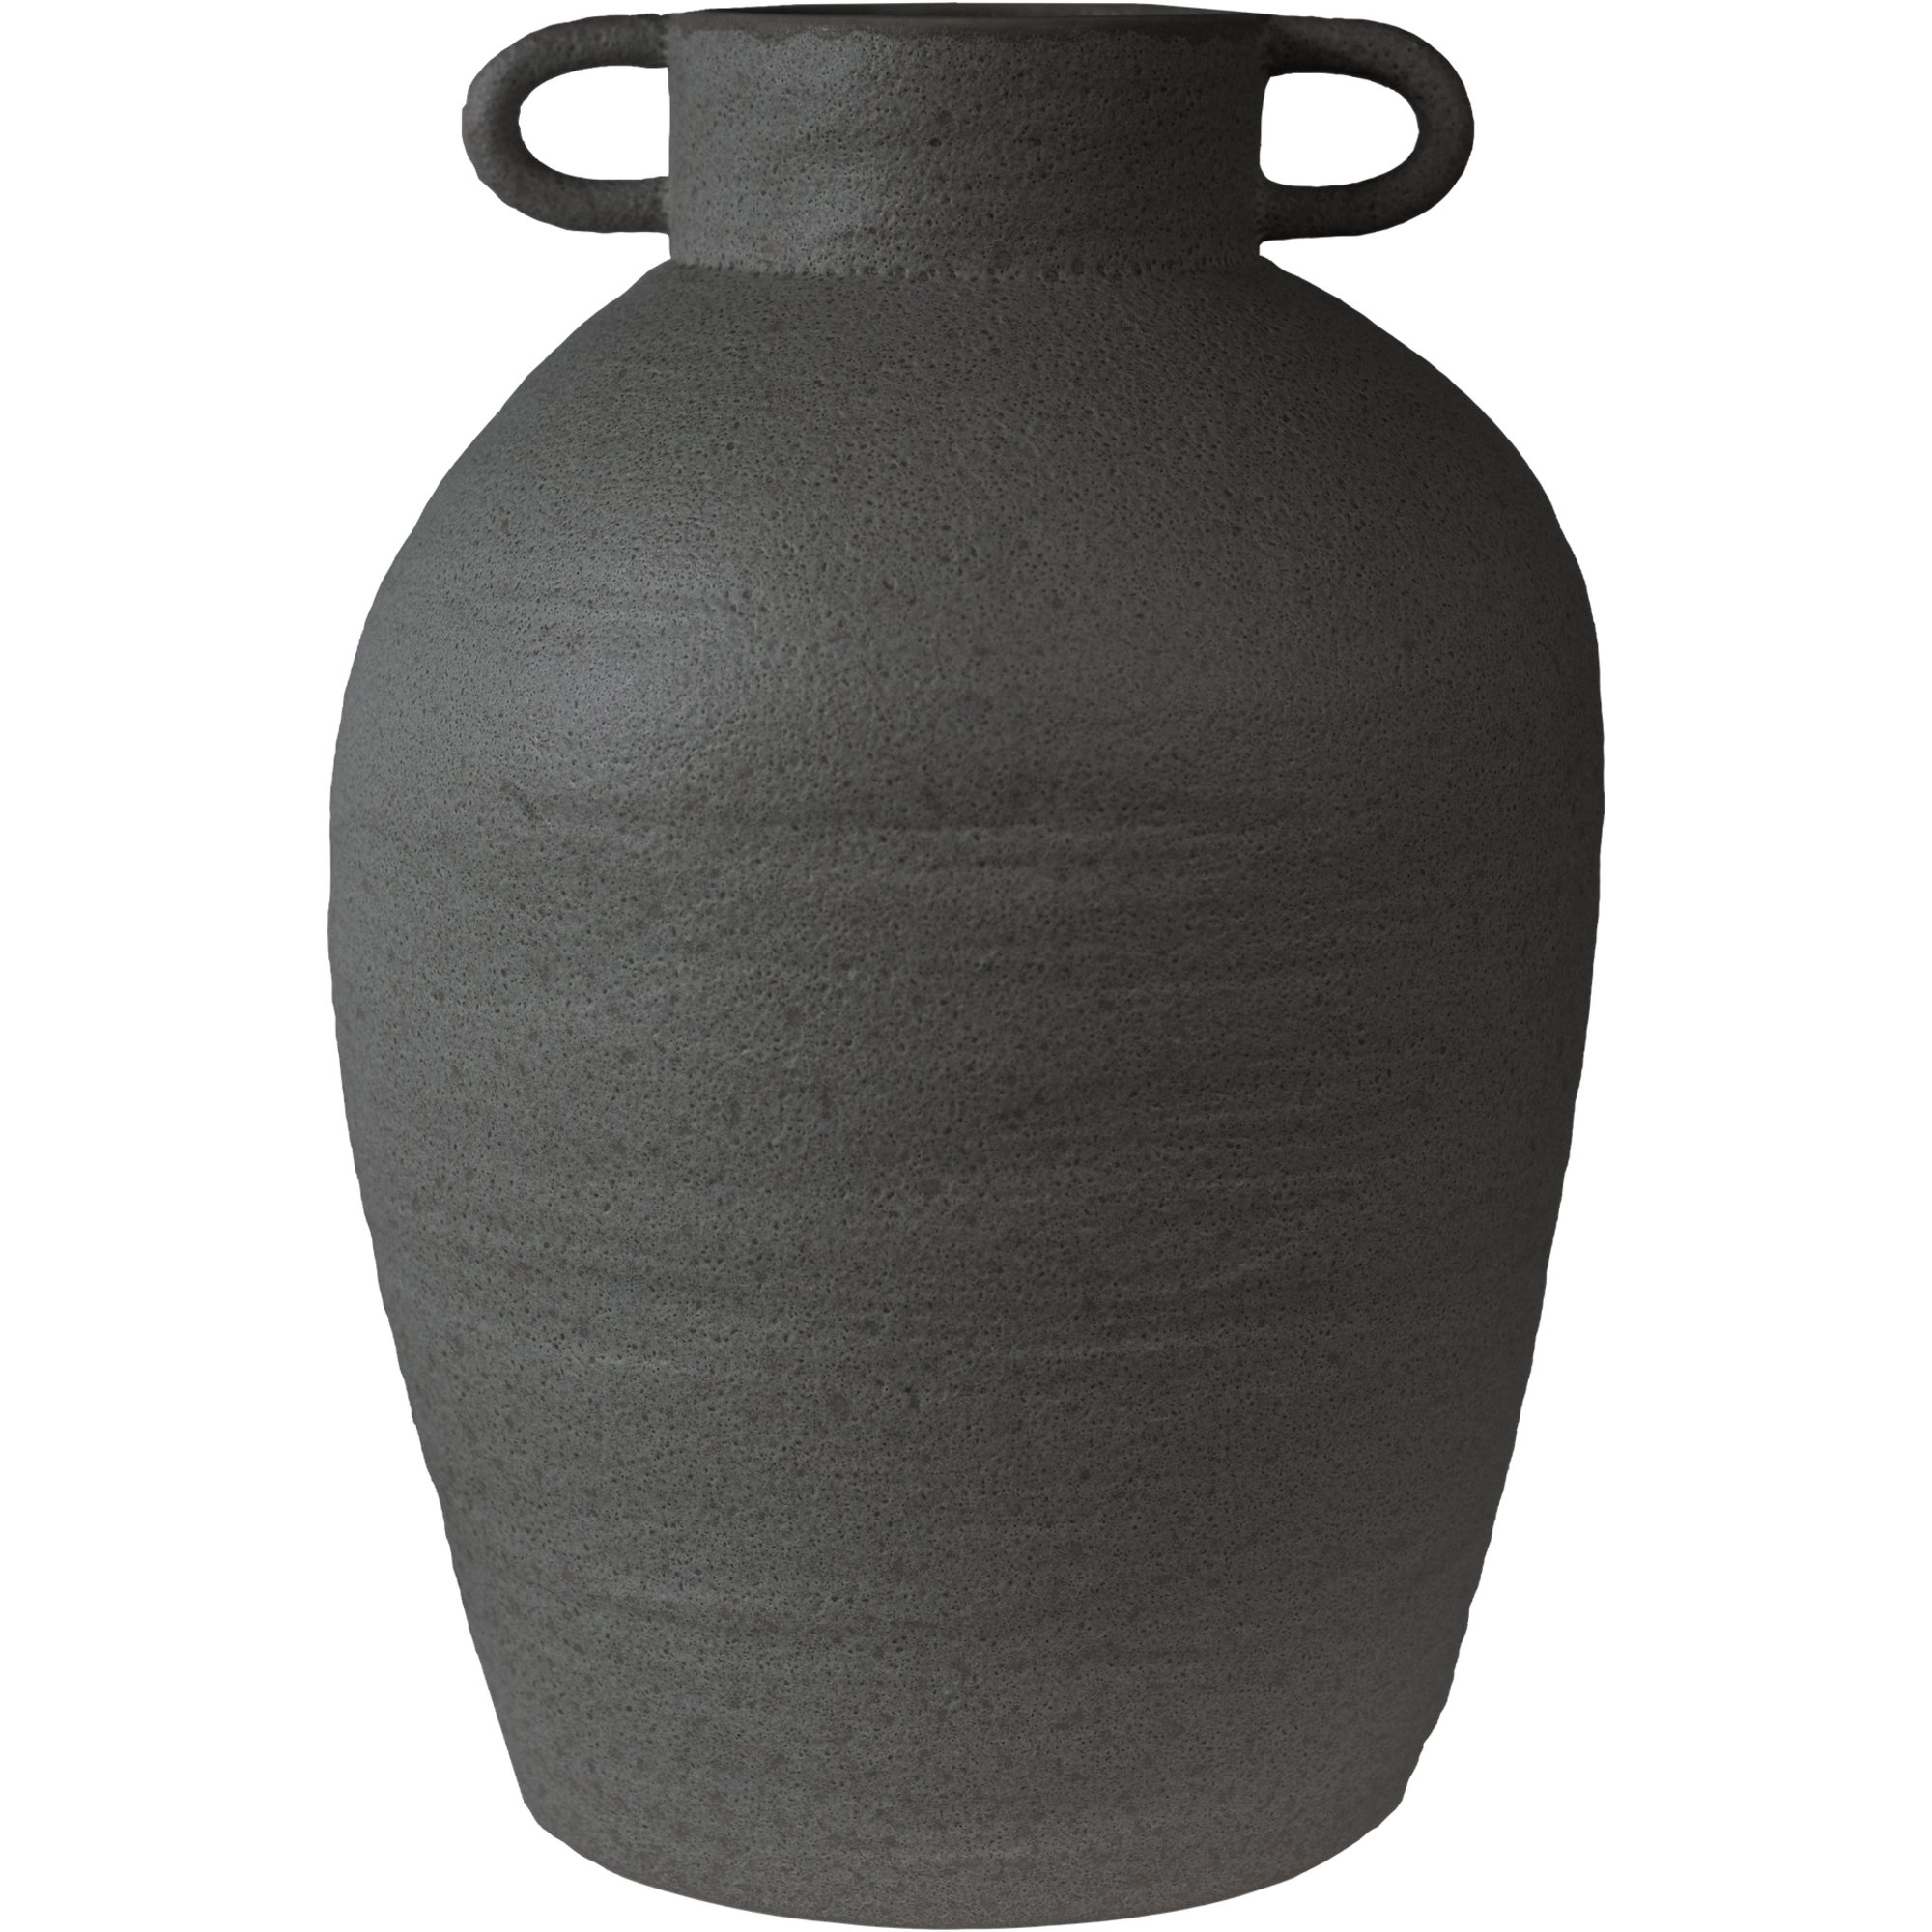 DBKD Long vas large black